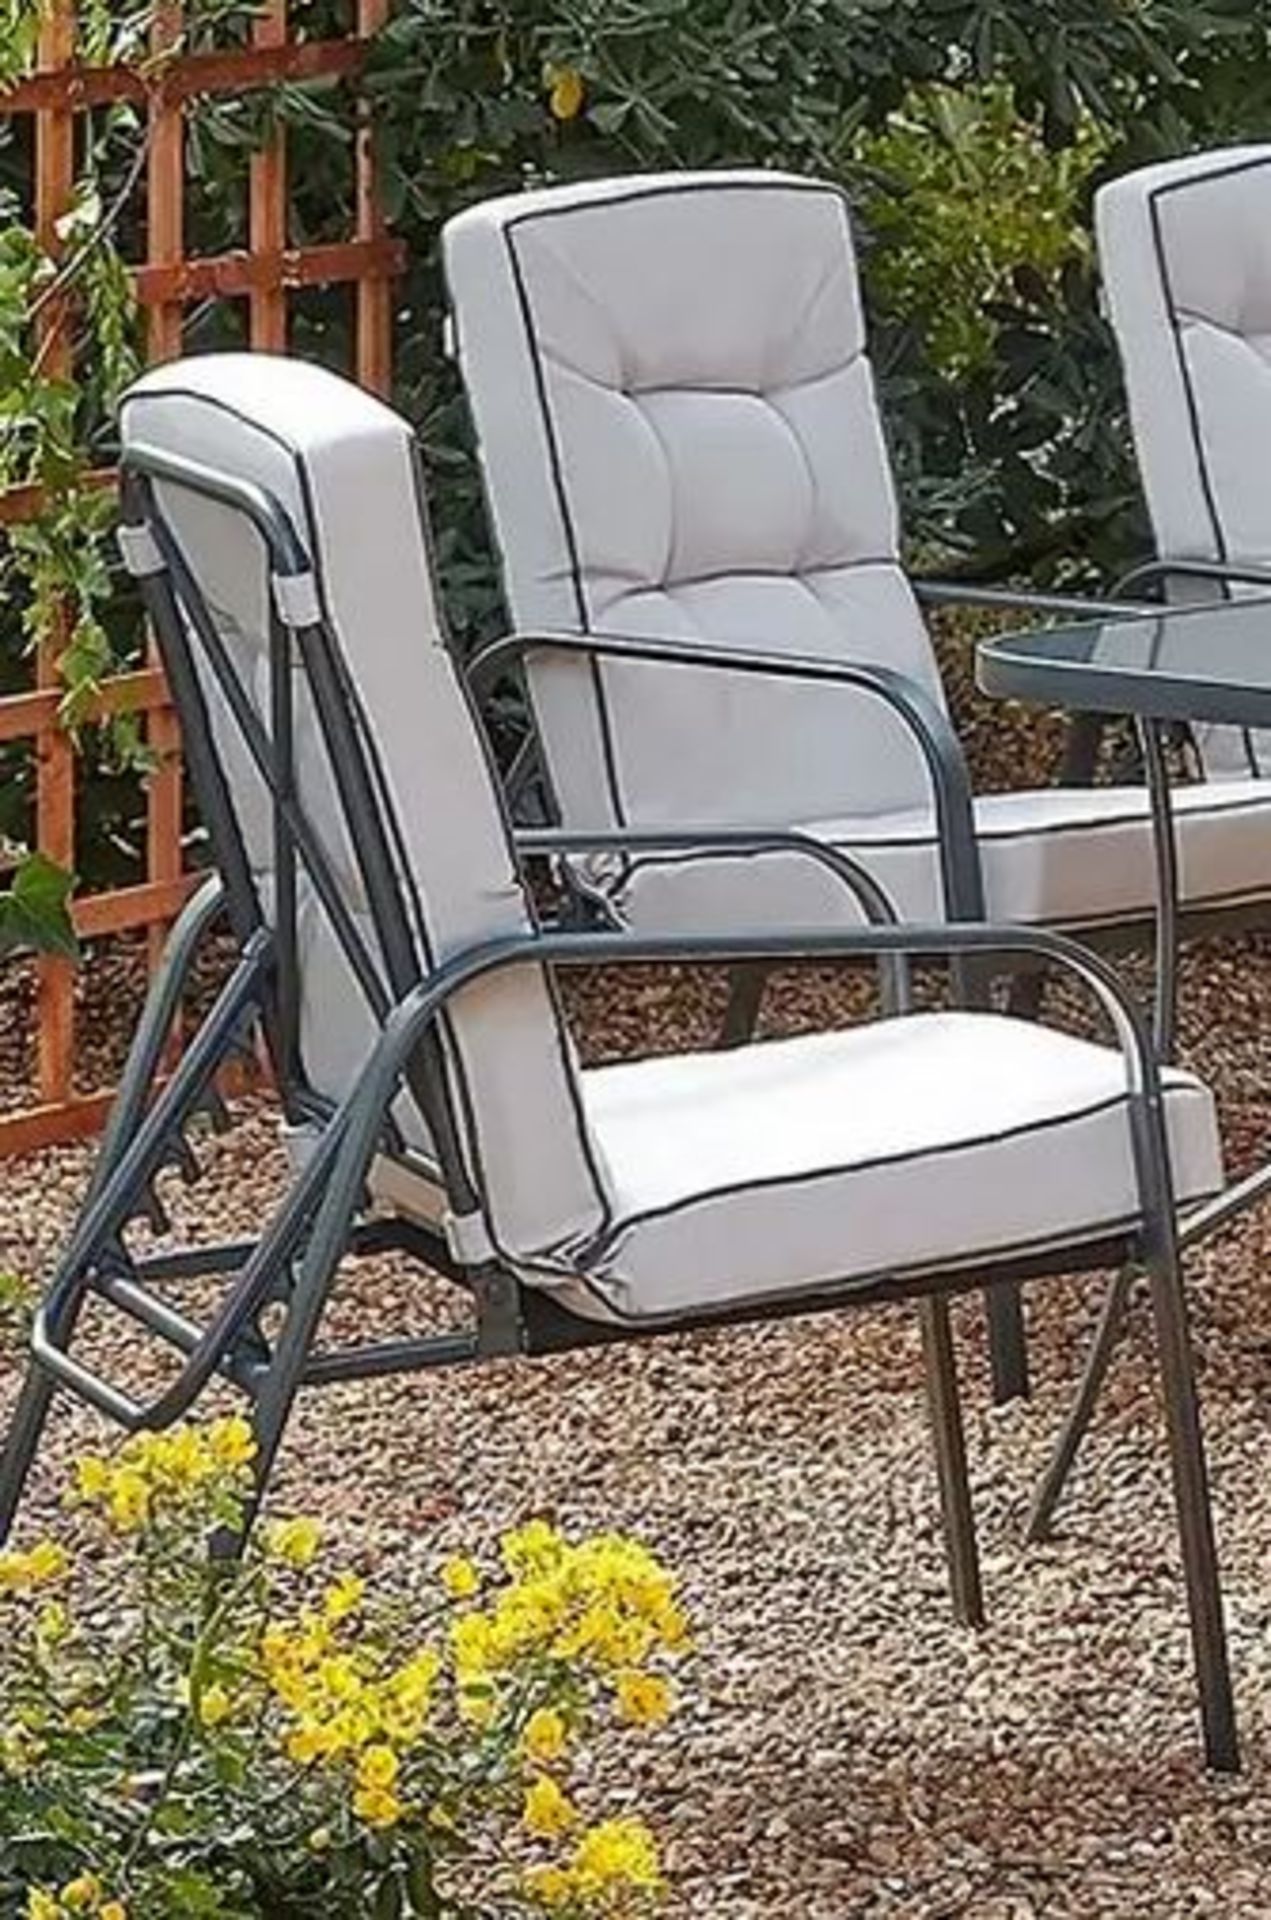 (2O) 6x Rowly Reclining Garden Chair With 6x Cushions RRP £70 Each.